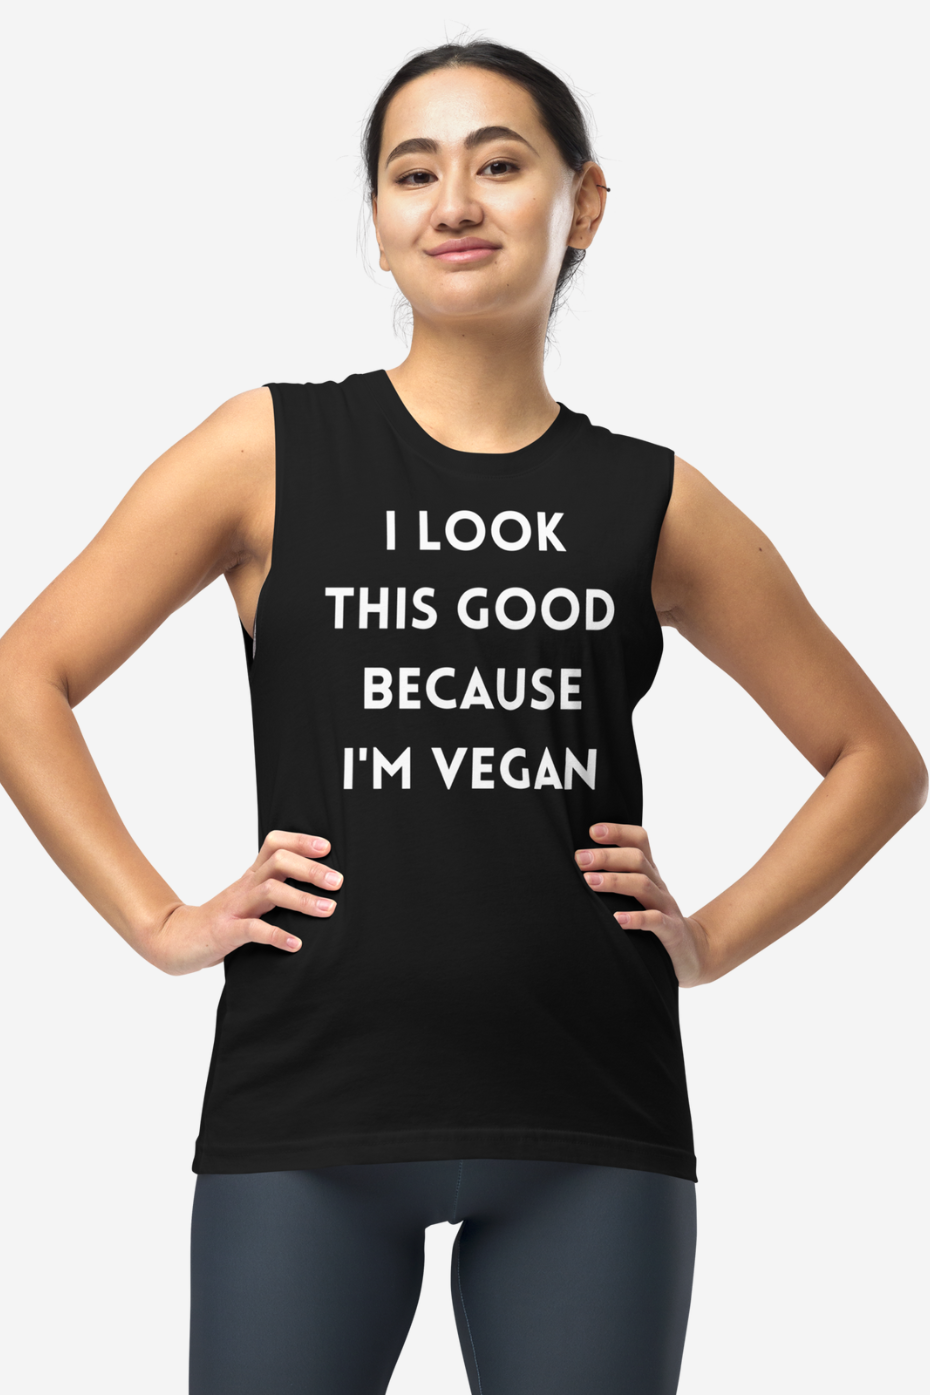 Because I'm Vegan - Unisex Muscle Shirt